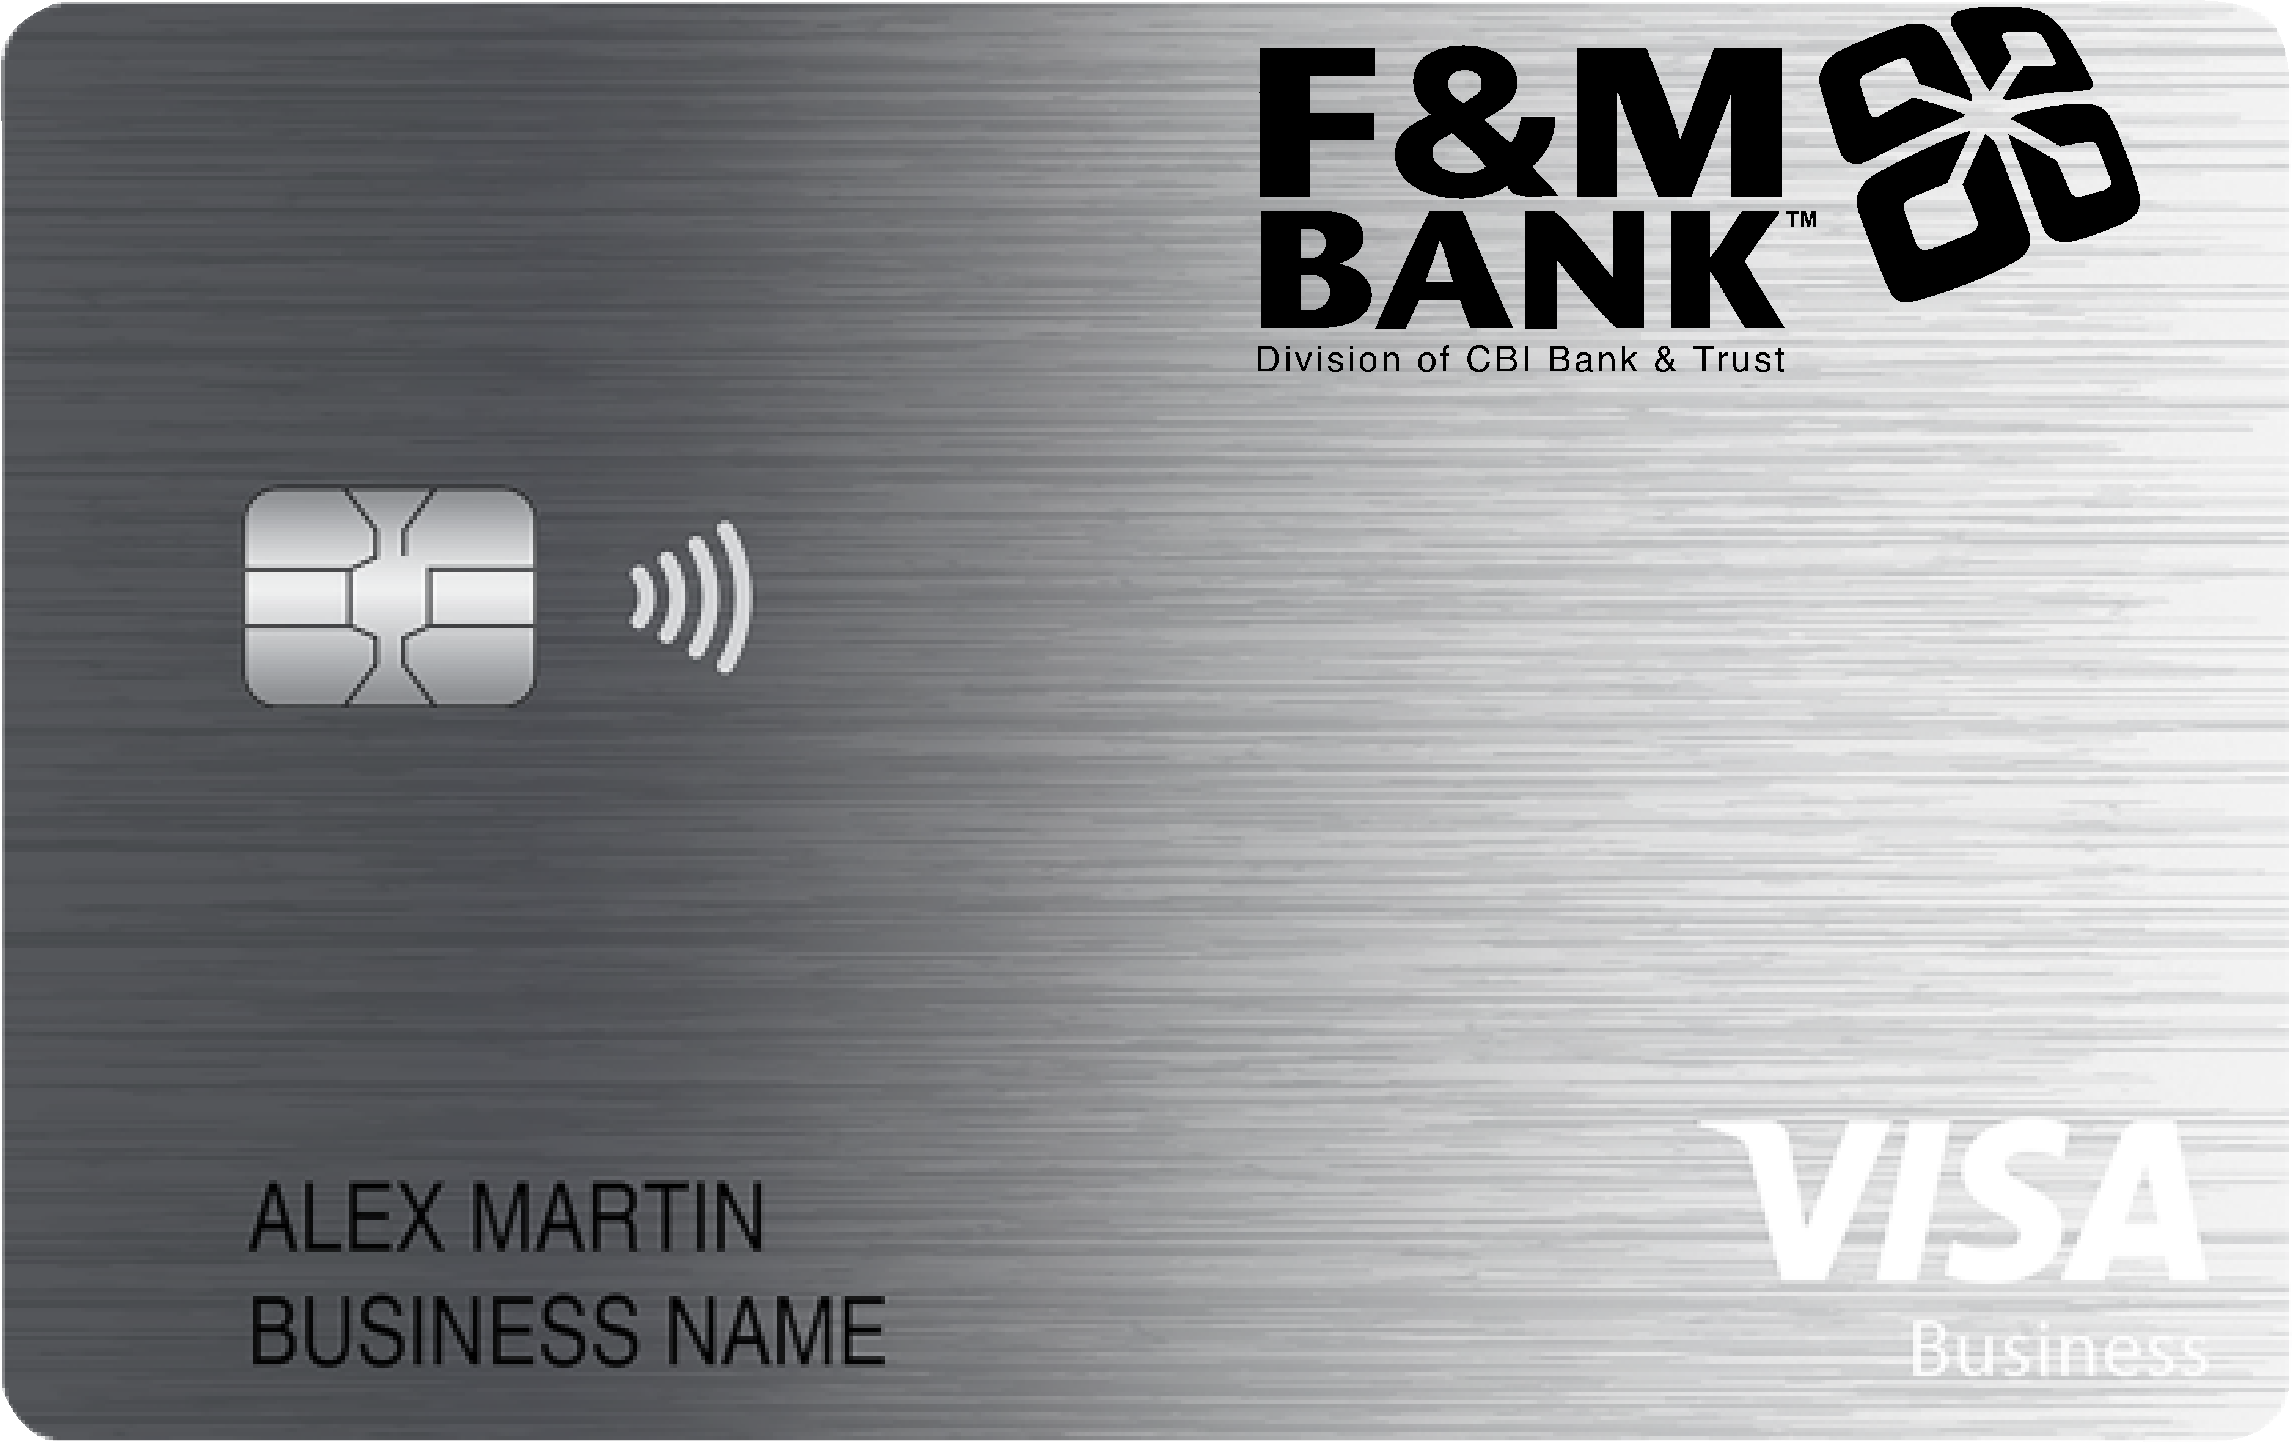 F&M Bank, Division of CBI Bank & Trust Business Real Rewards Card